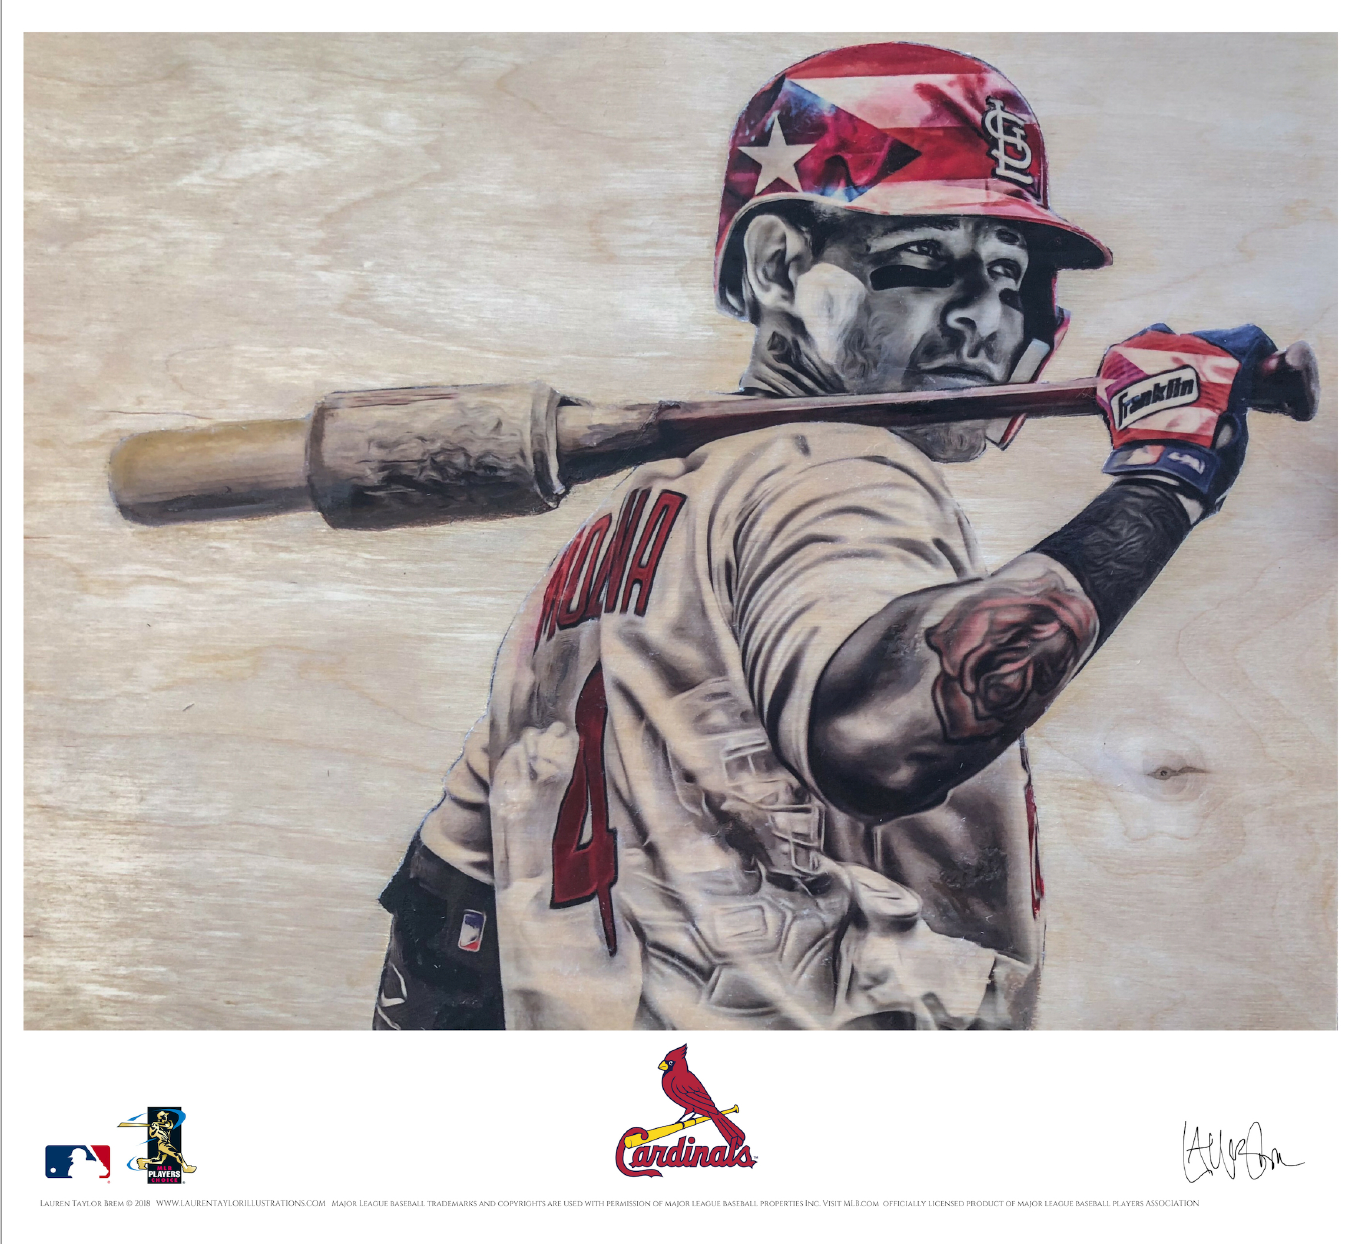 Yadier Molina St. Louis Cardinals MLB Jerseys for sale